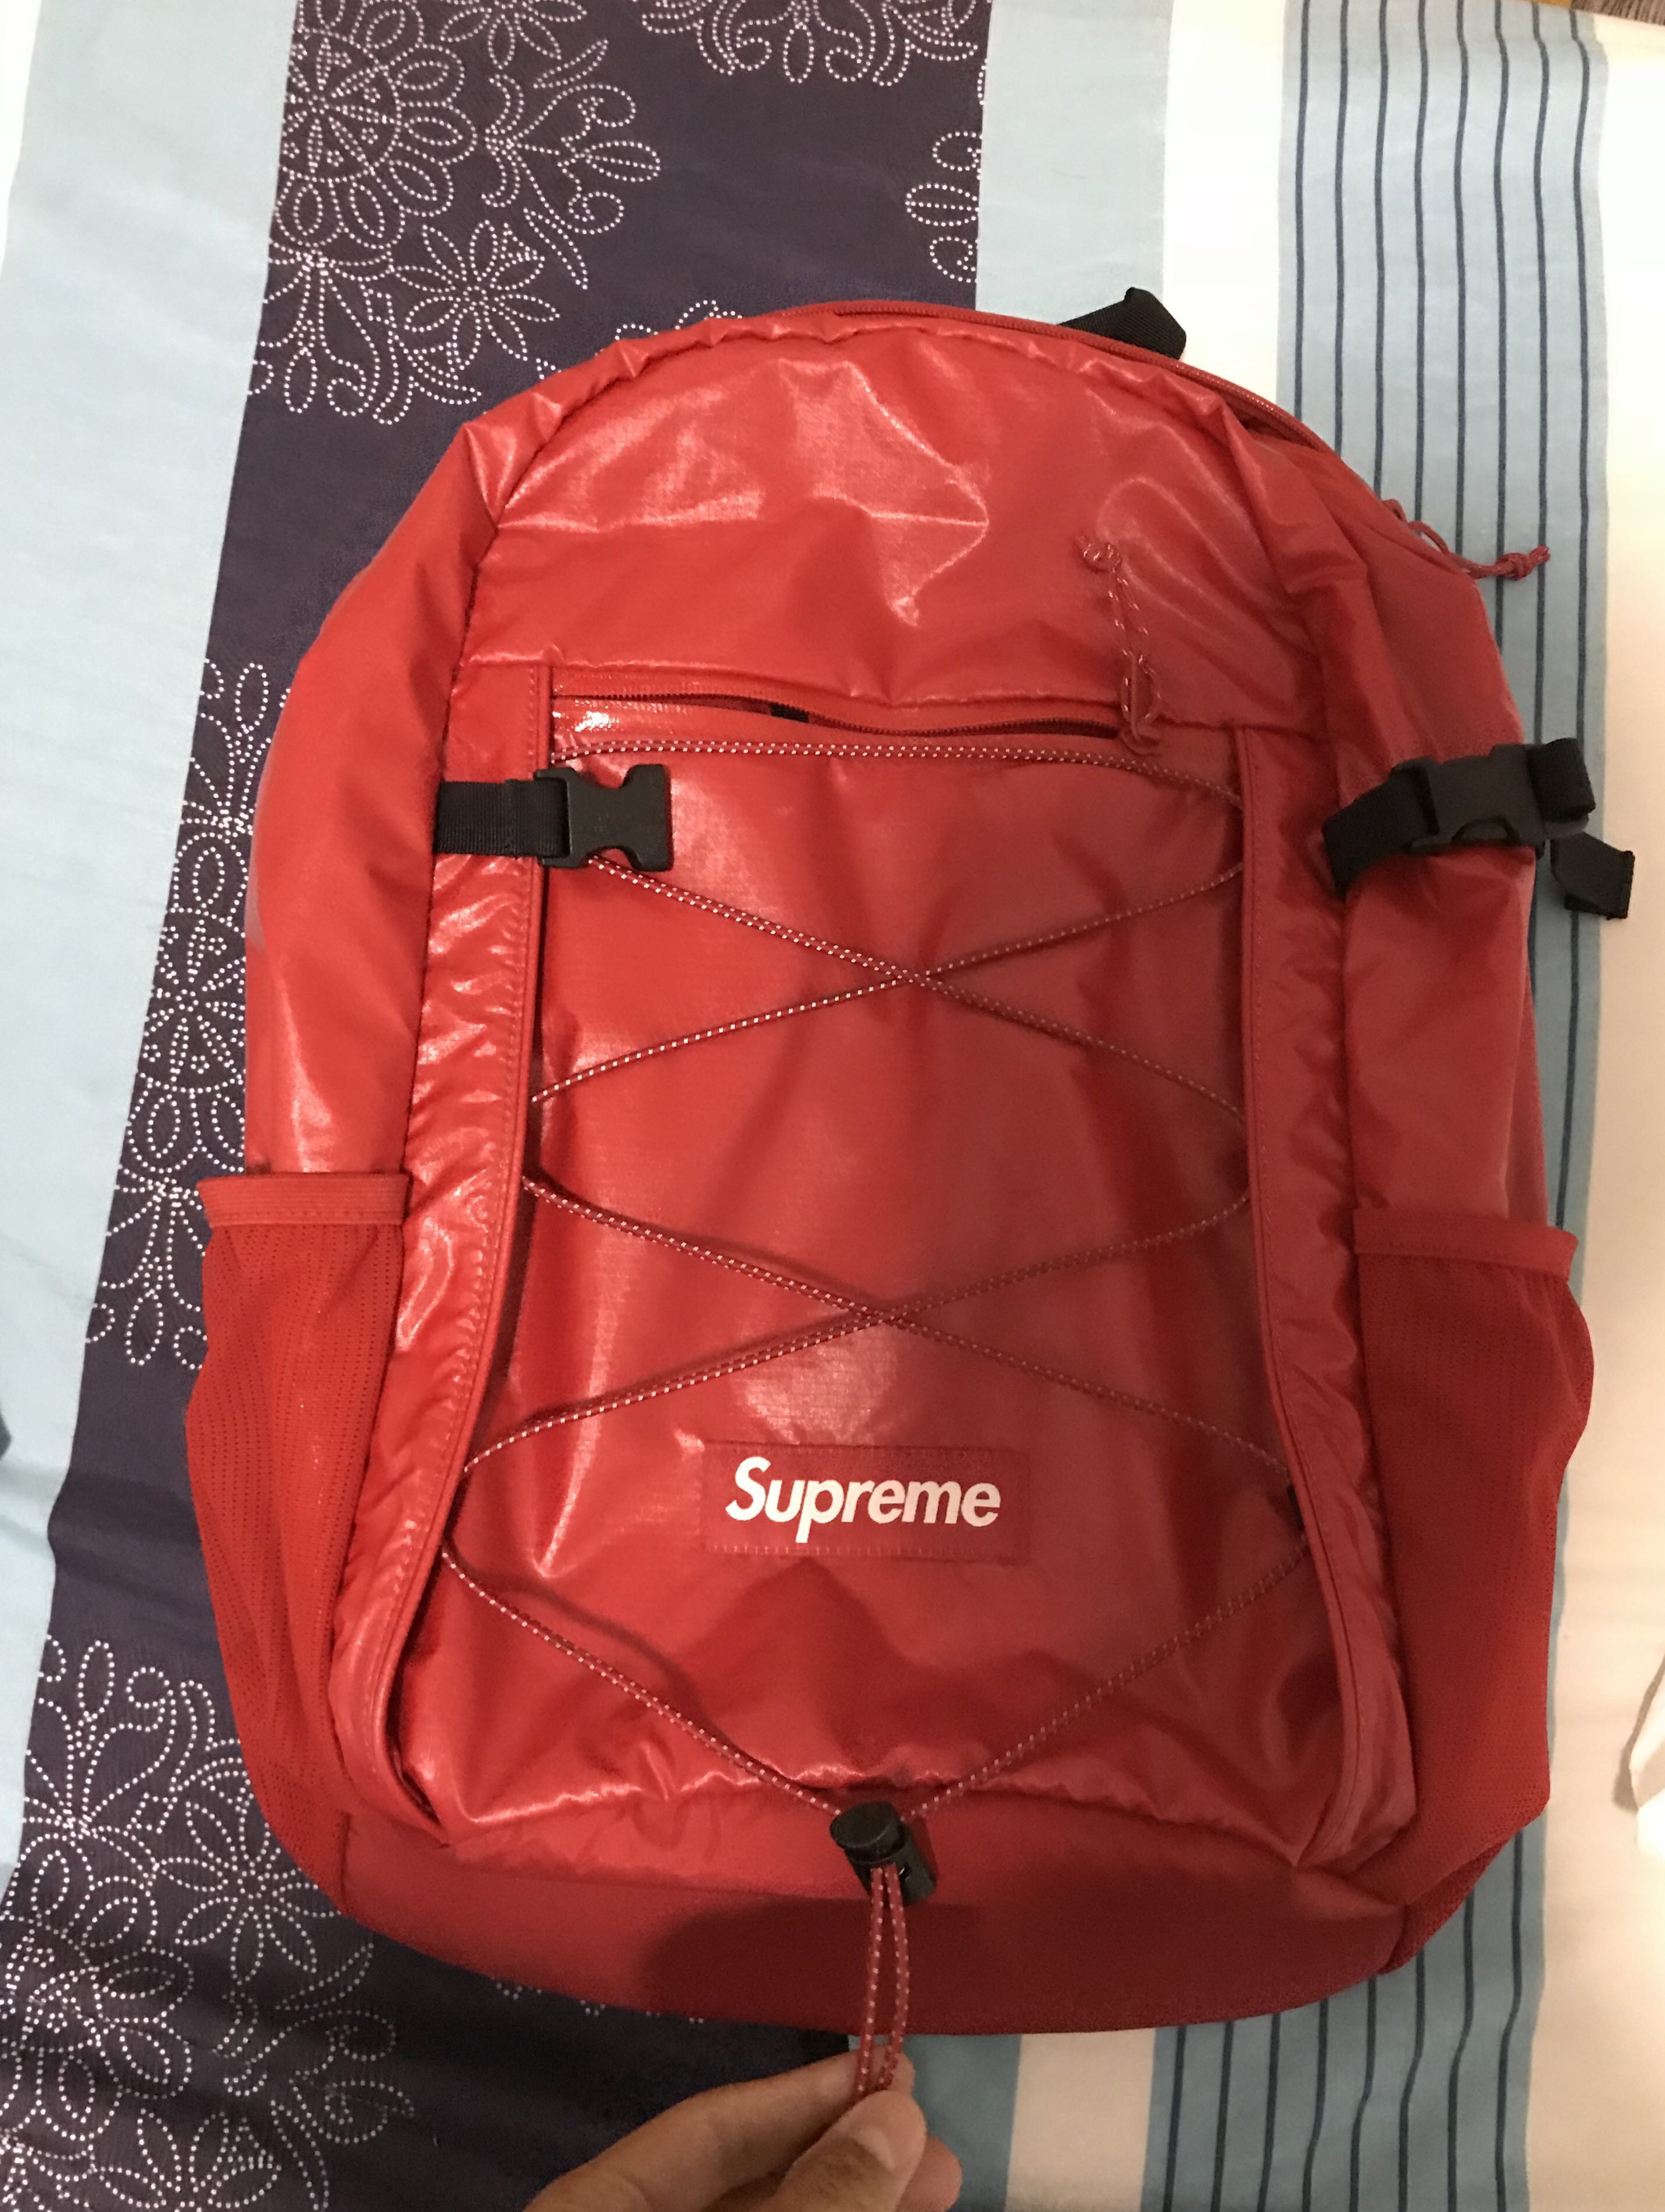 supreme backpack price original